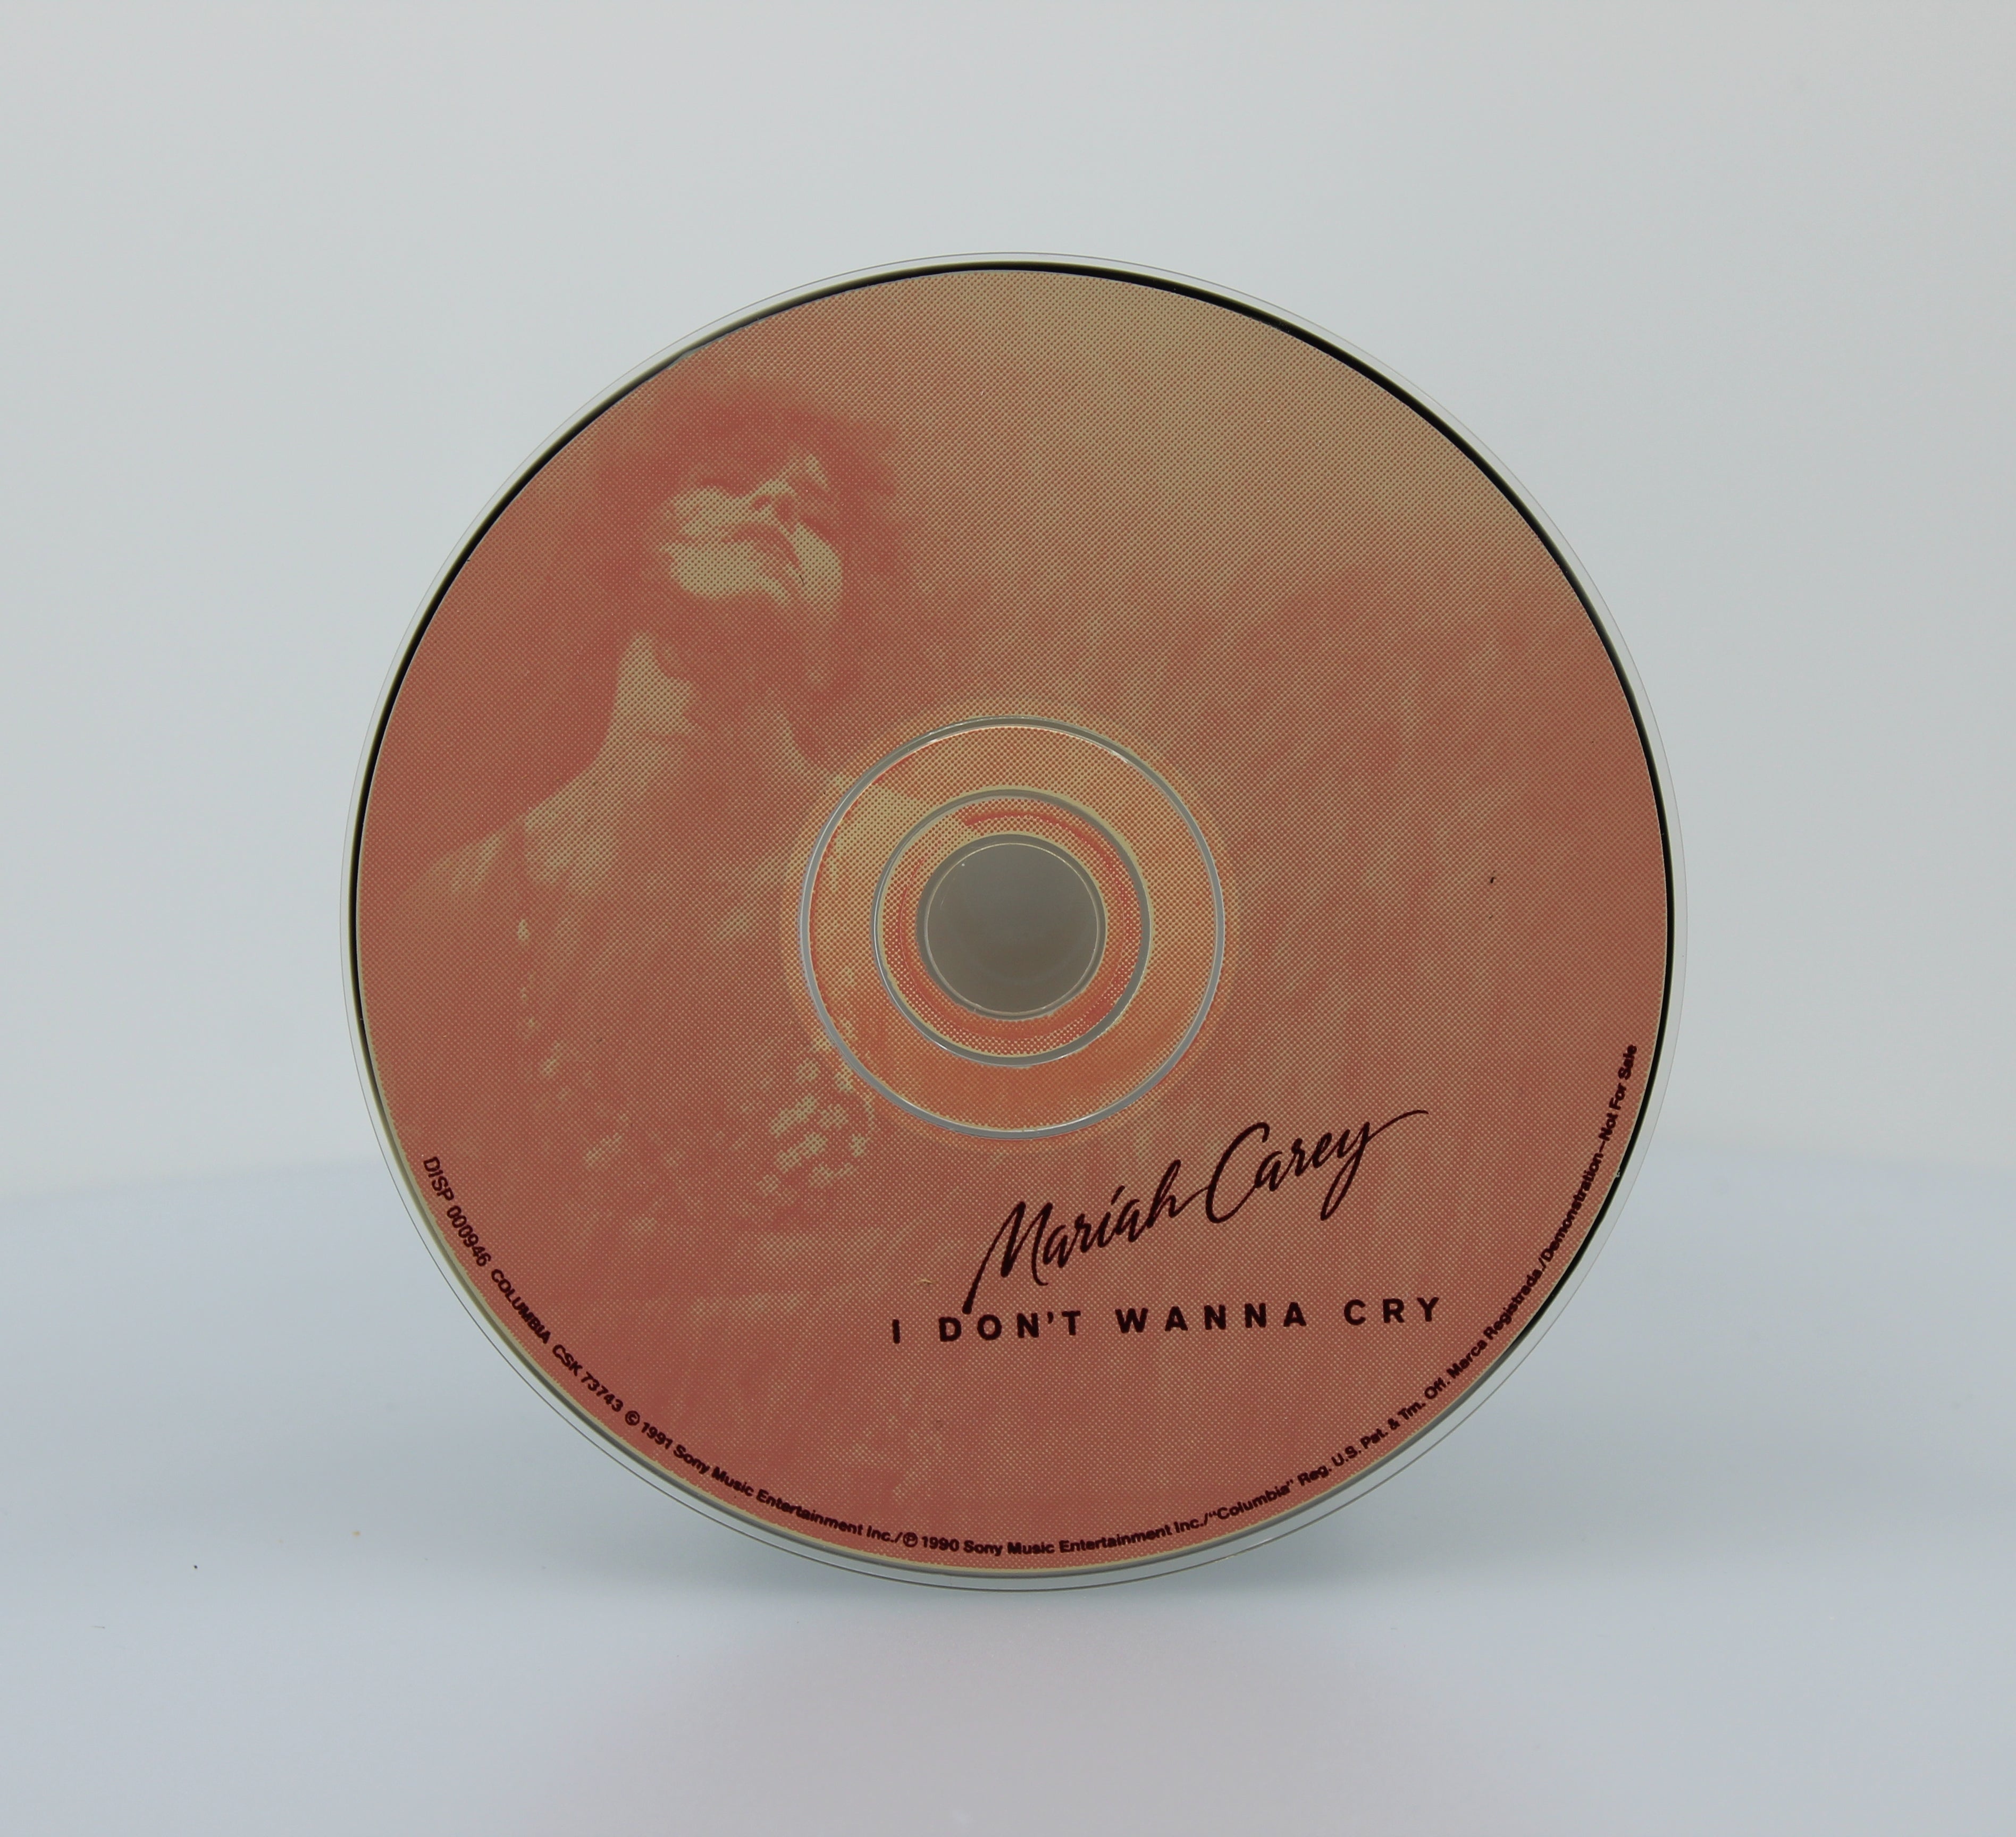 Mariah Carey, I Don't Wanna Cry, CD Single Promo, US 1991 (CD 648